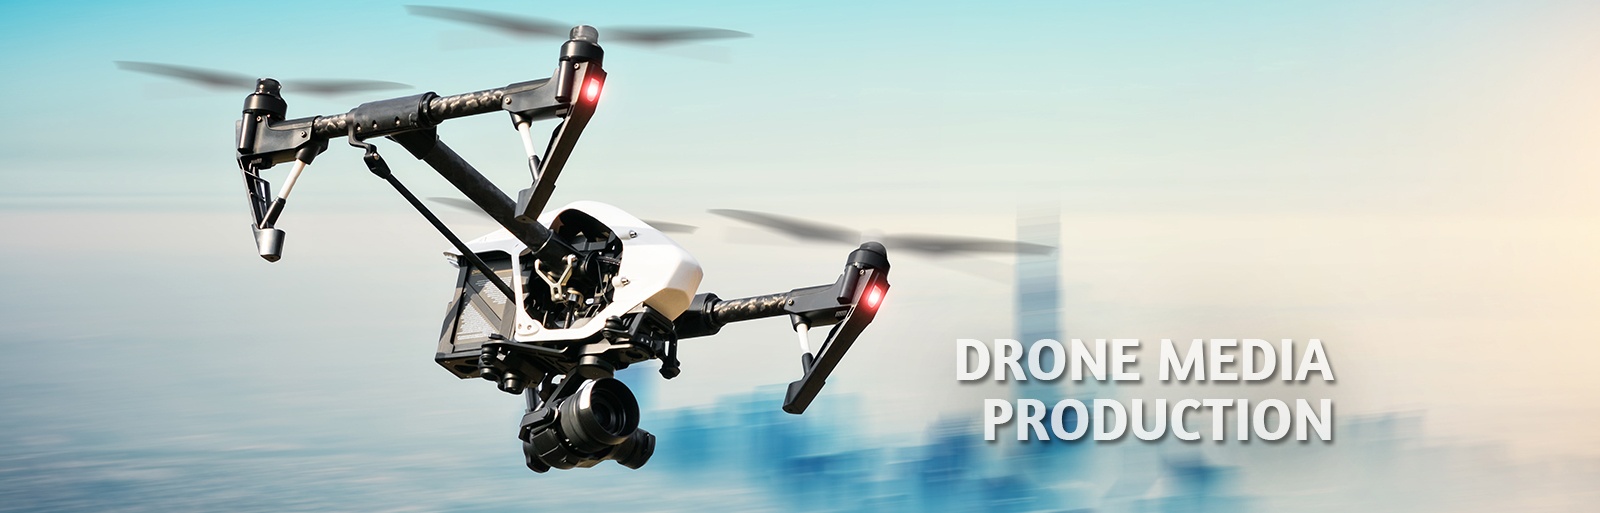 Drone Media Production by LogicWorx Studios Inc.